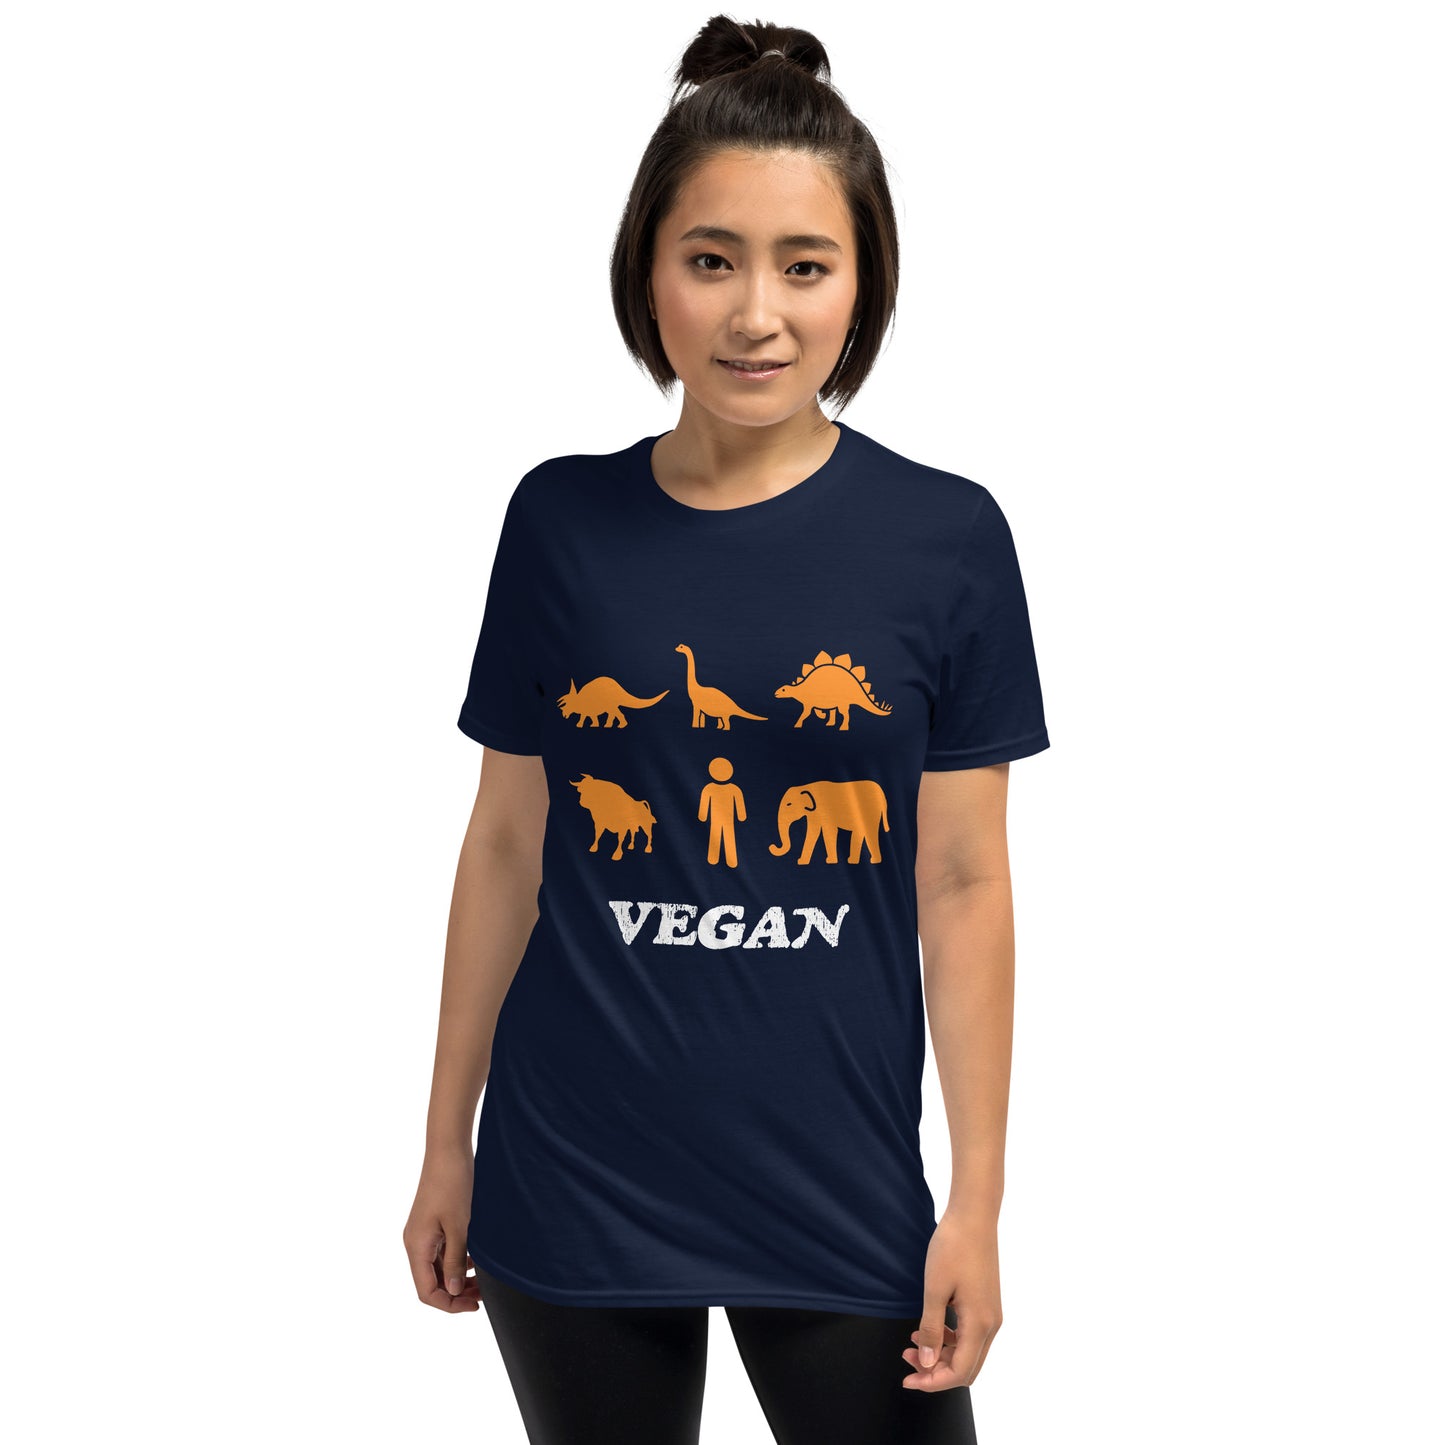 We're All Herbivores/Vegans T-Shirt